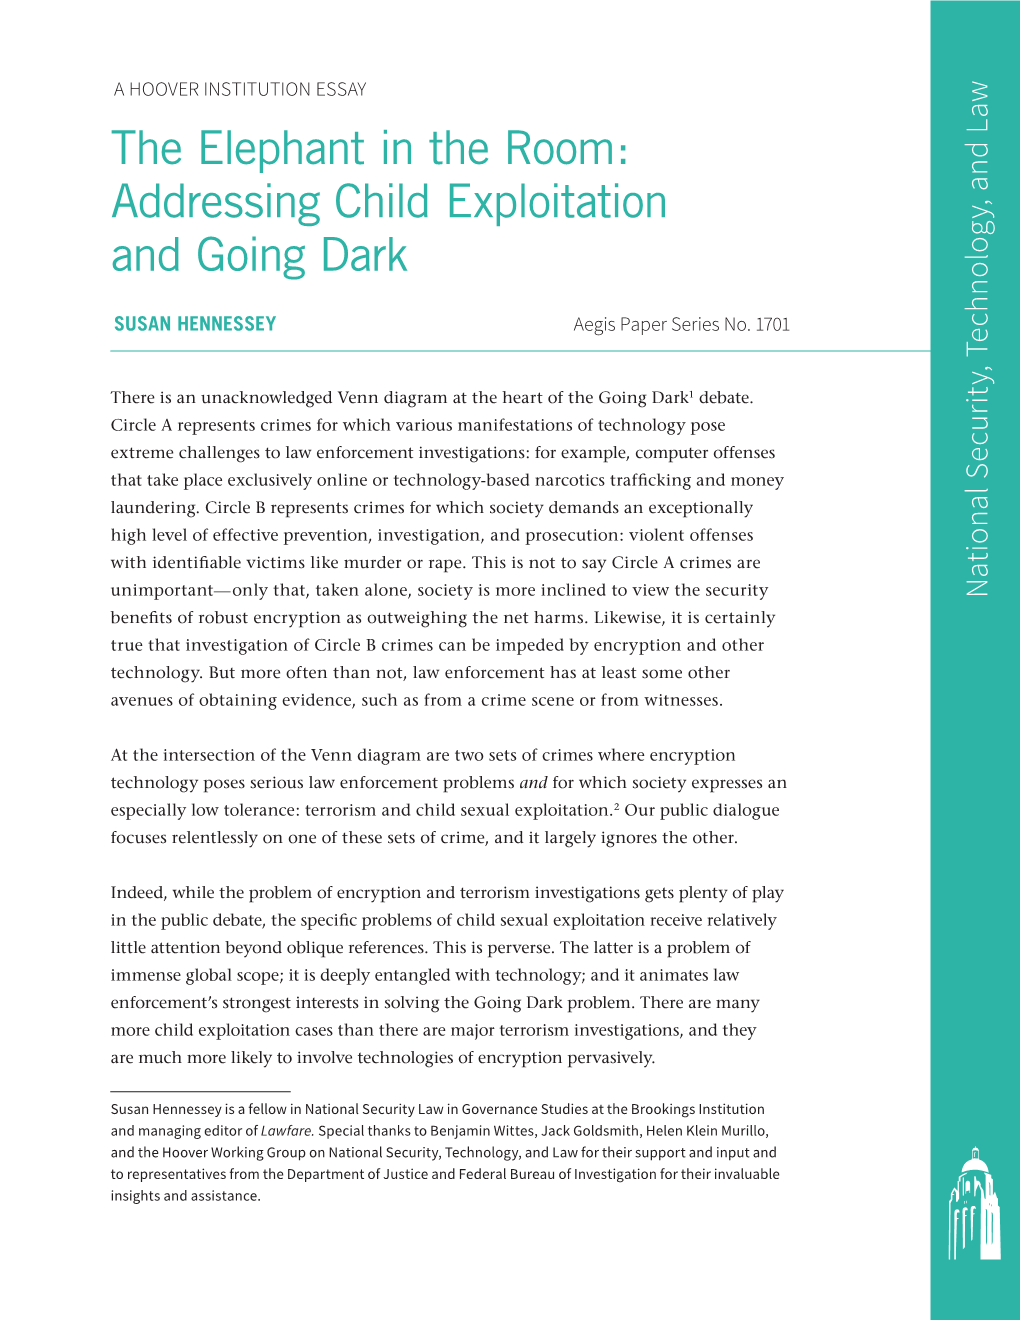 Addressing Child Exploitation and Going Dark 3